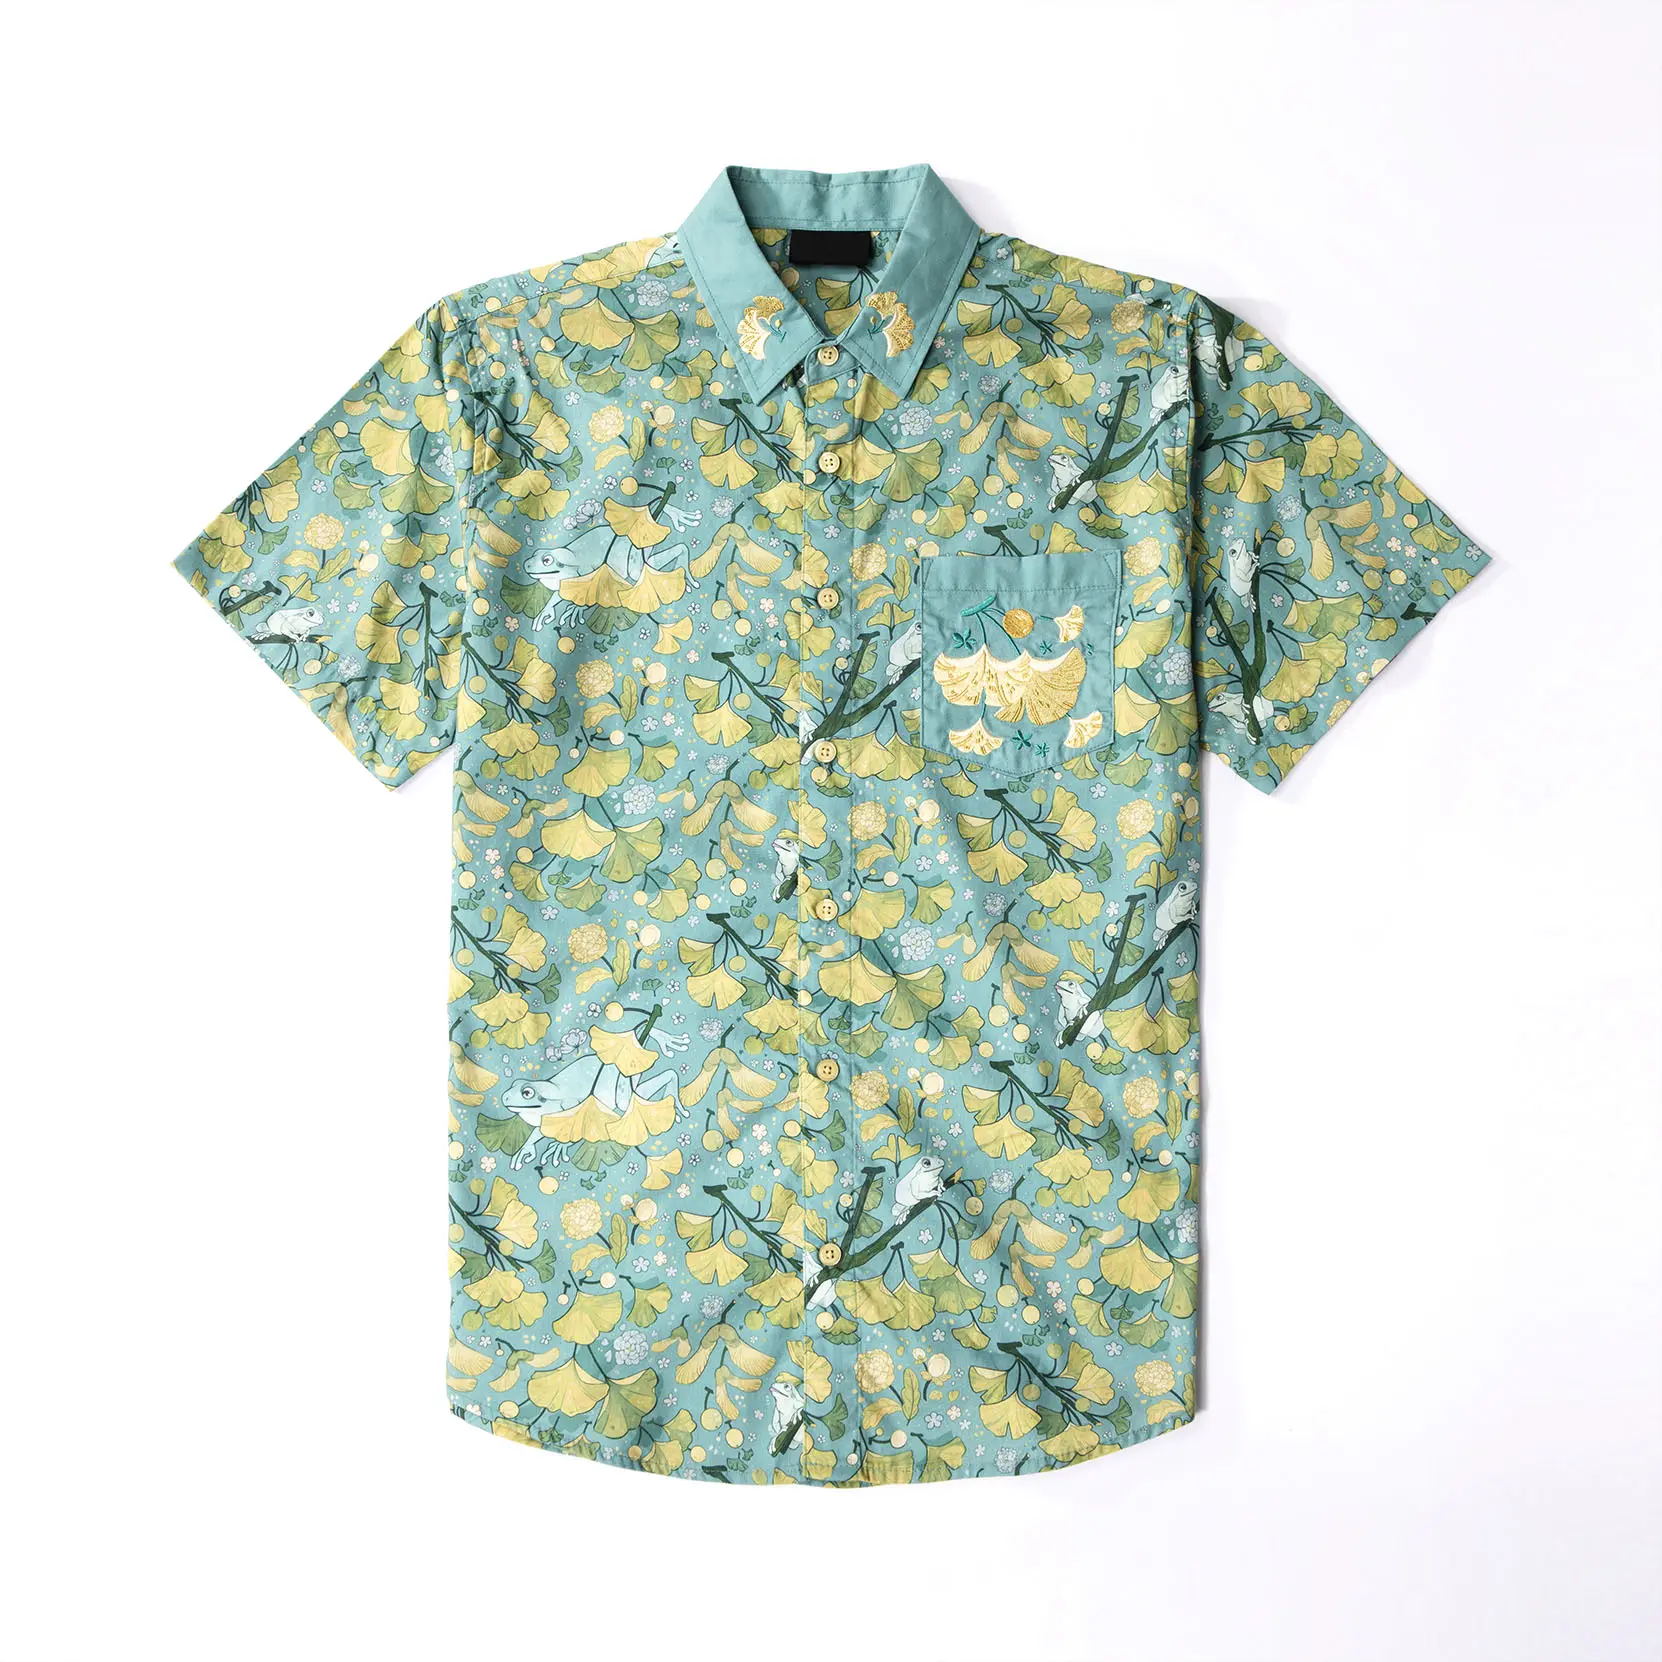 Best selling oem popular rayon printed beach fancy blue palm hawaiian shirts pattern for men